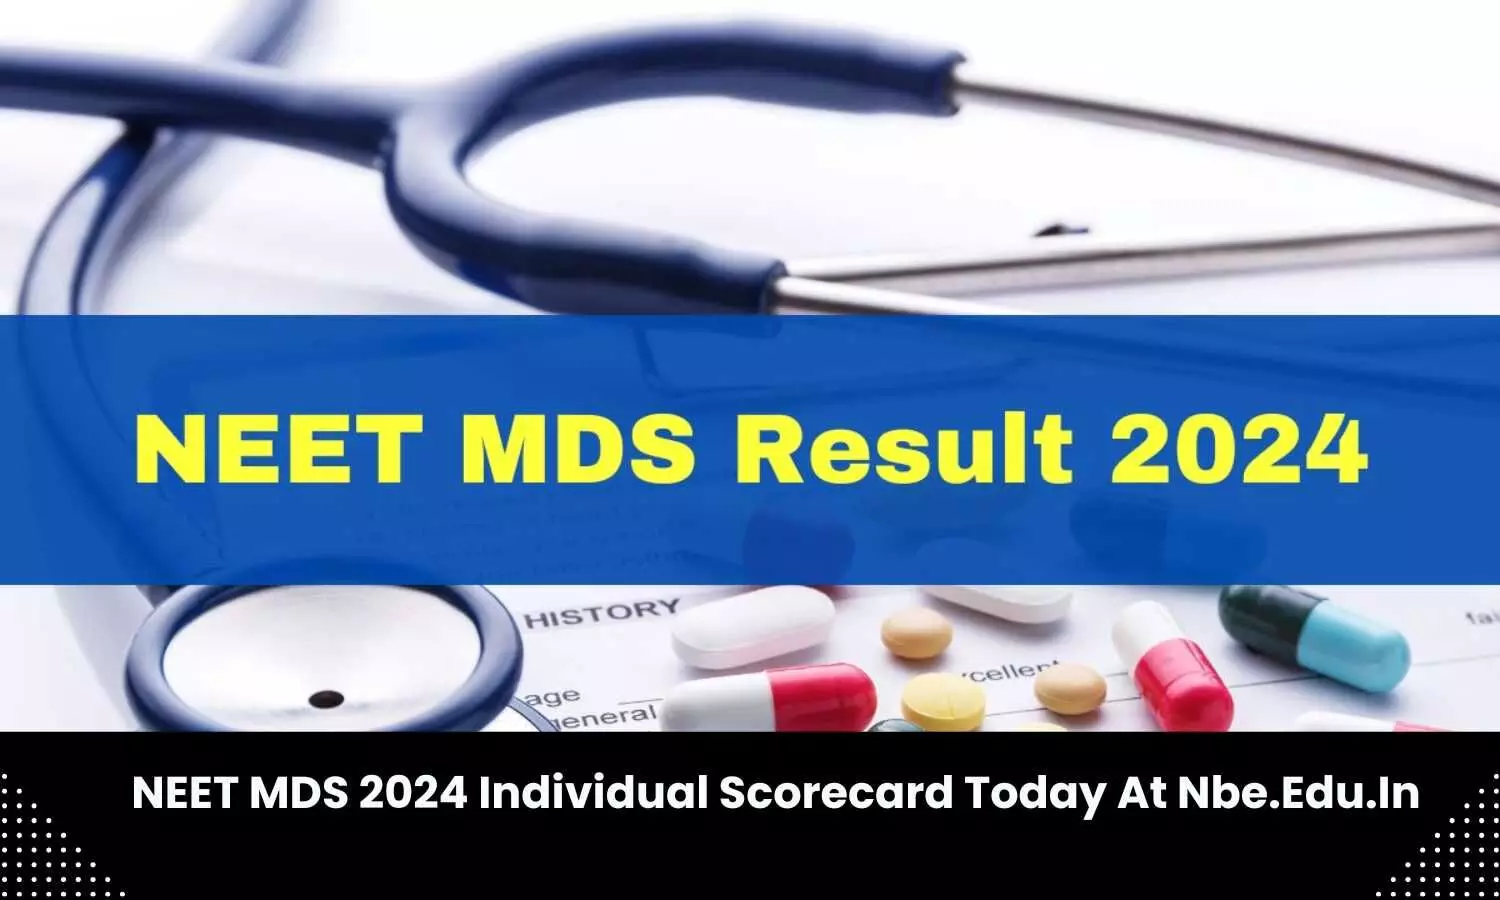 NBE set to unveil NEET MDS 2024 individual scorecard